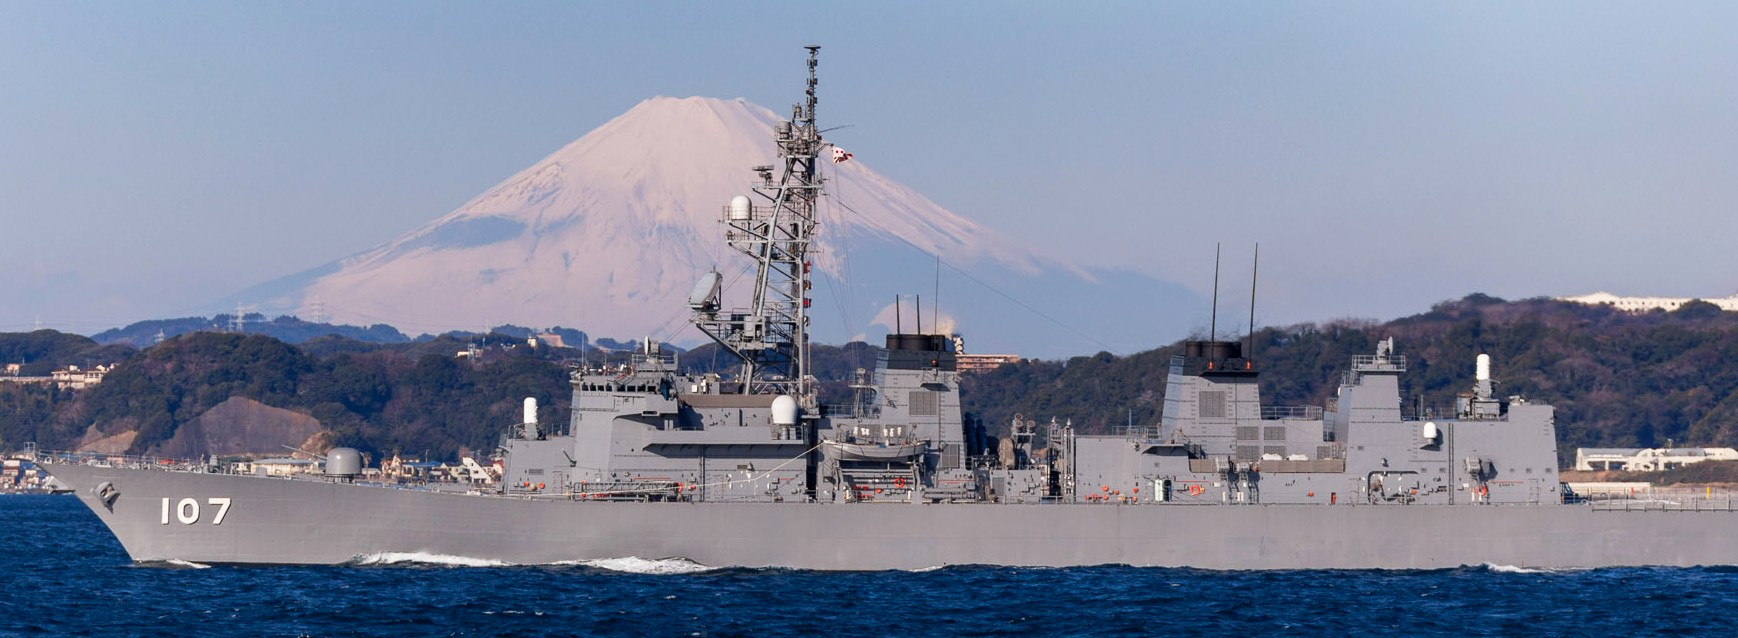 dd-107 js ikazuchi murasame class destroyer japan maritime self defense force jmsdf 14